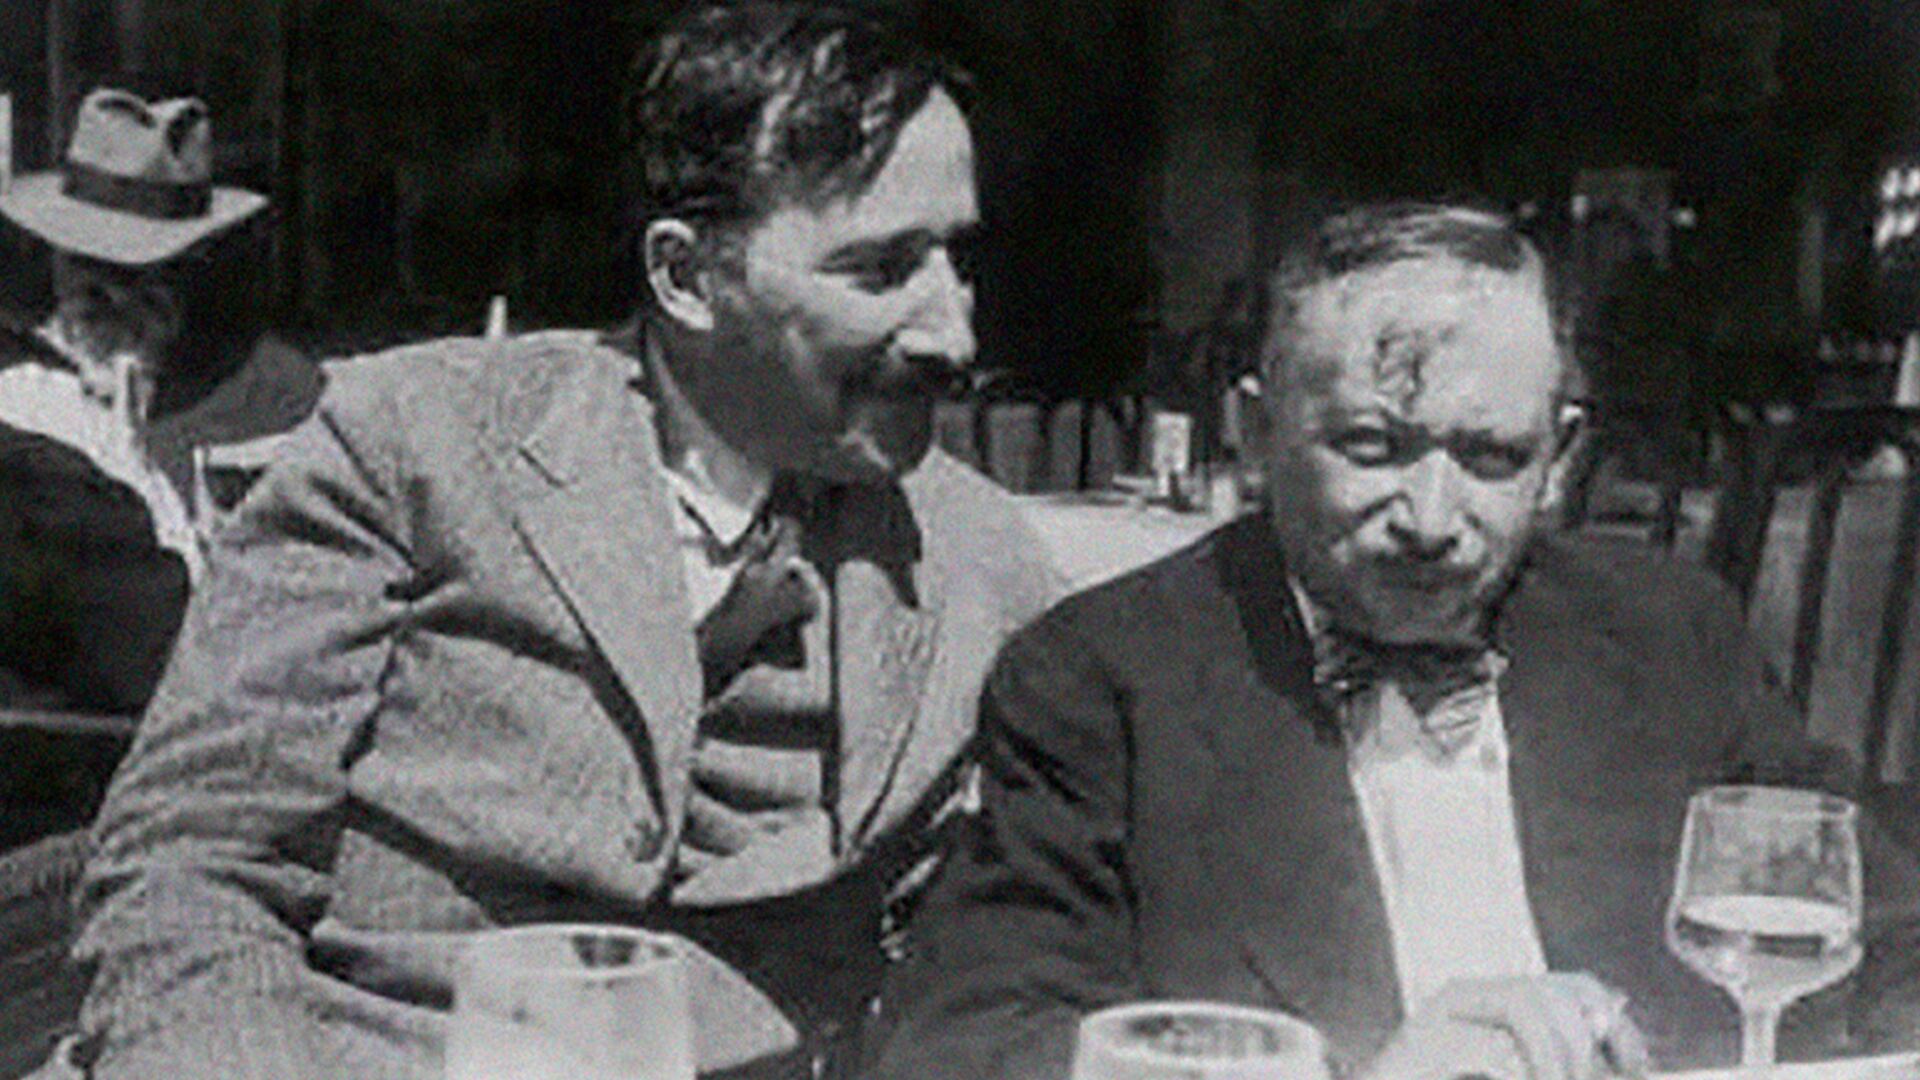 Joseph Roth con Stefan Zweig - fui vi y escribi